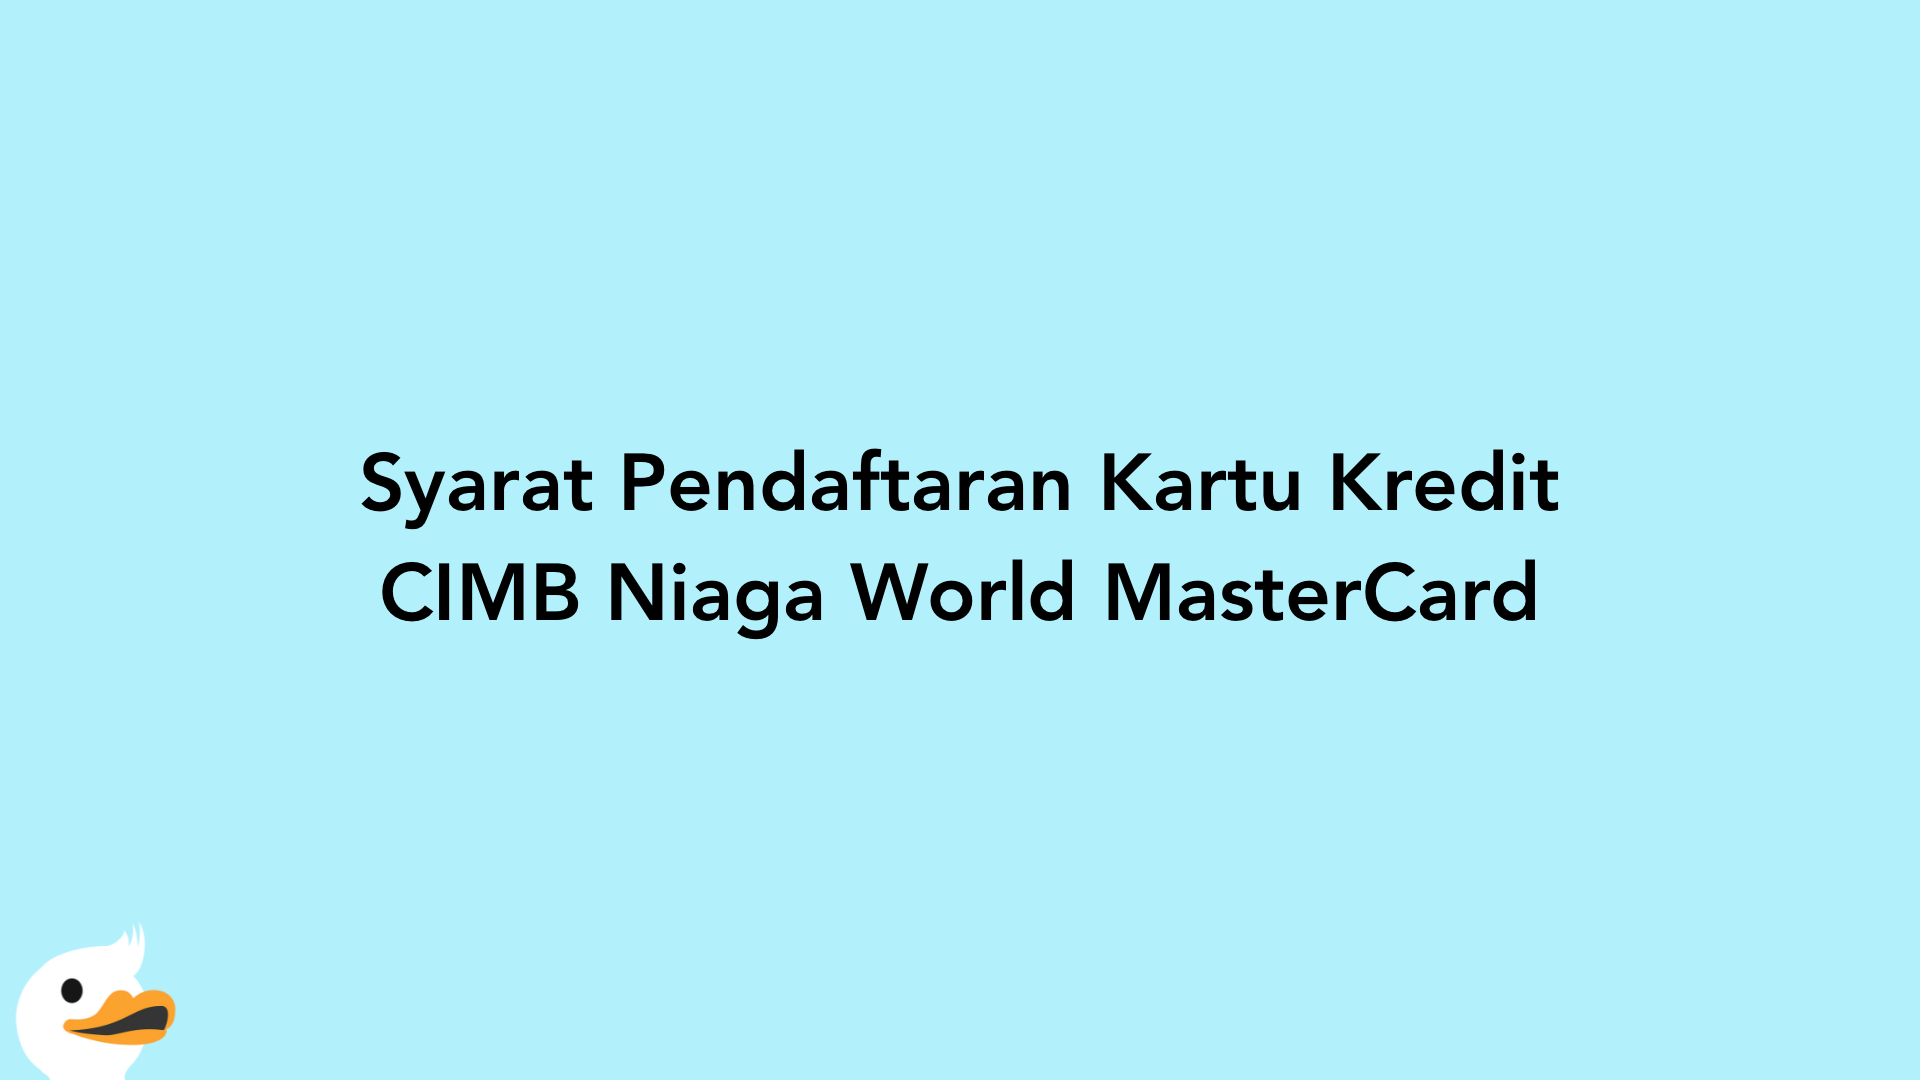 Syarat Pendaftaran Kartu Kredit CIMB Niaga World MasterCard